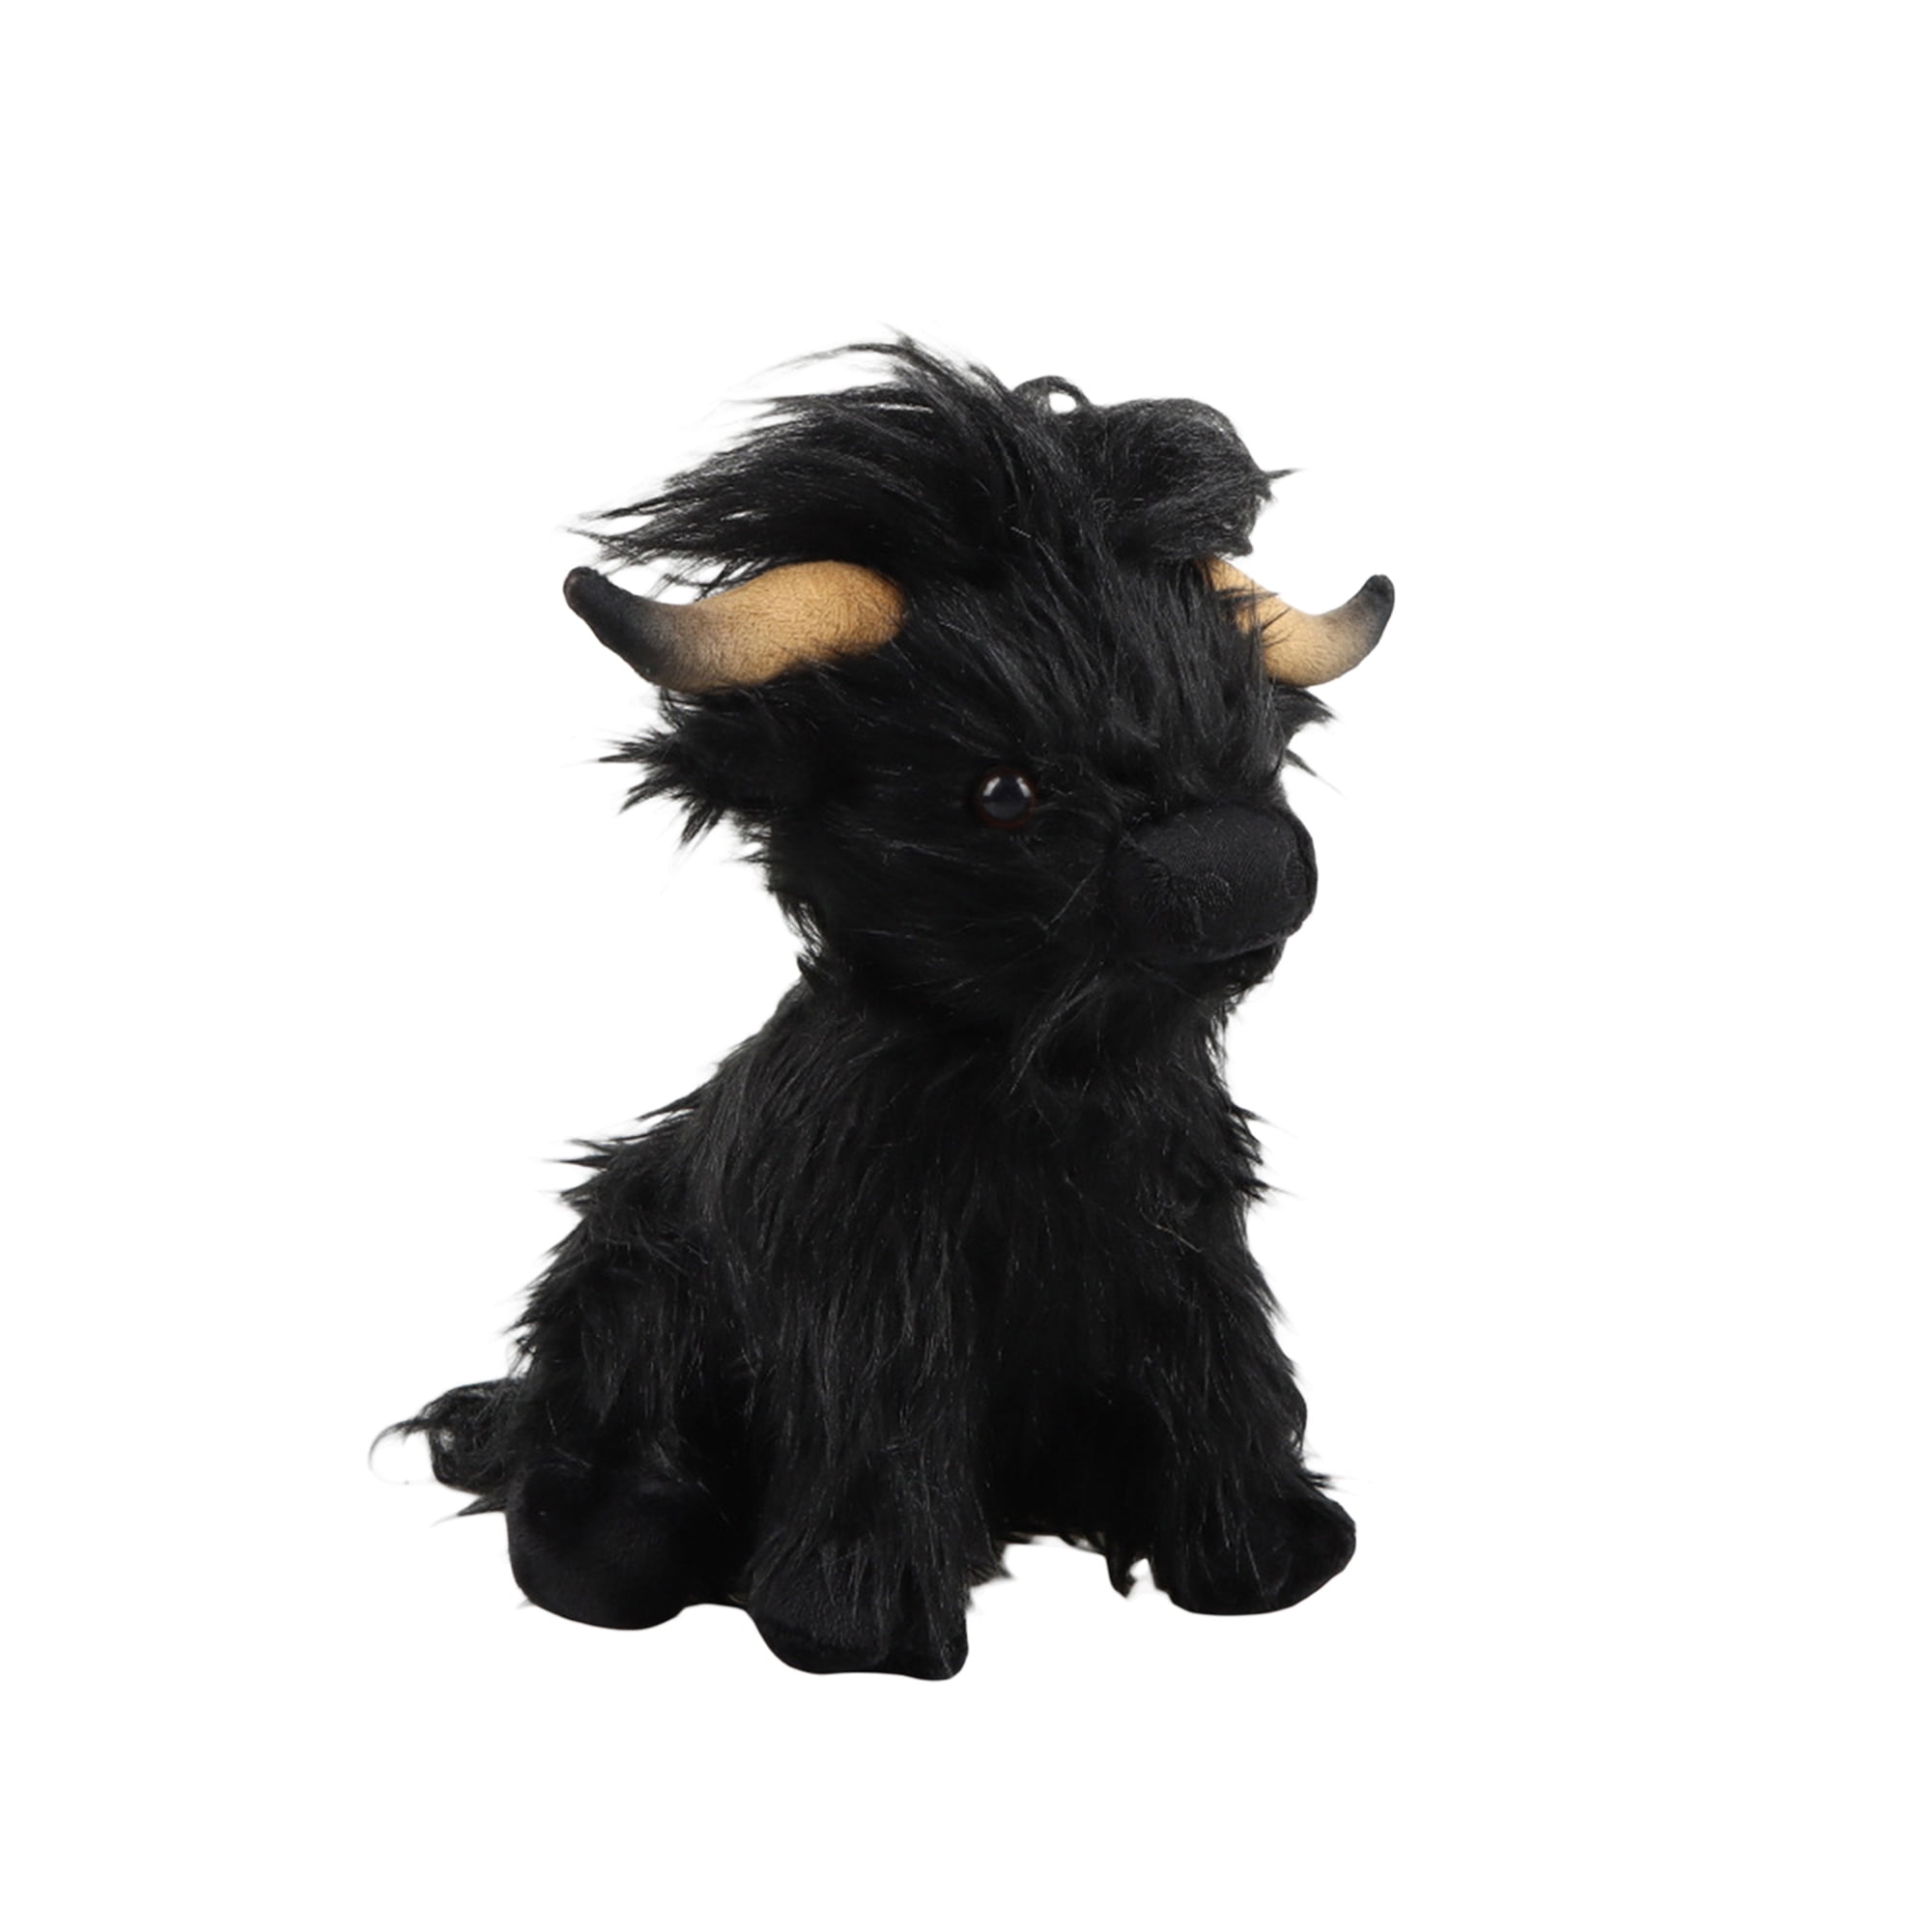  CYISONAL Highland Cow Stuffed Animals Plush Toy Fluffy Bull  Animal Doll Soft Gift for Kids Boys Girls, 10 inch Tall : Toys & Games